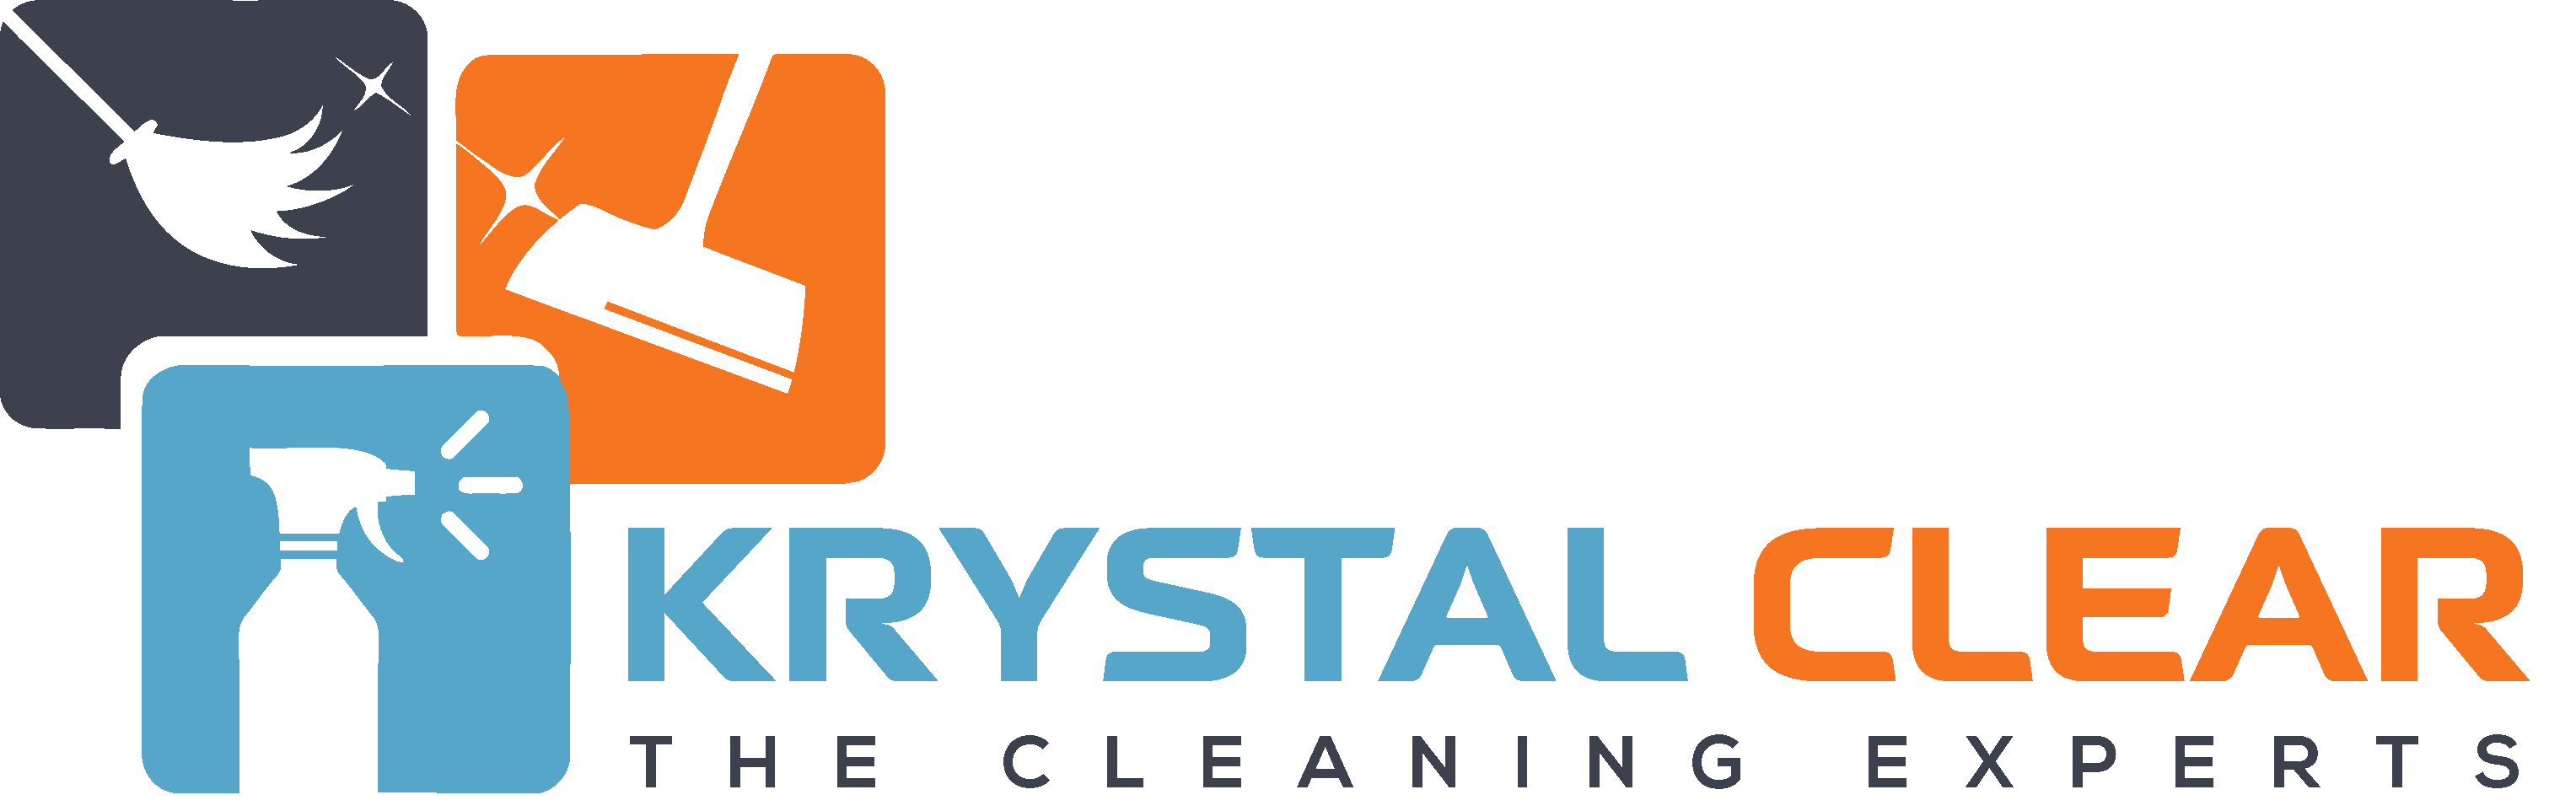 Krystal Clear